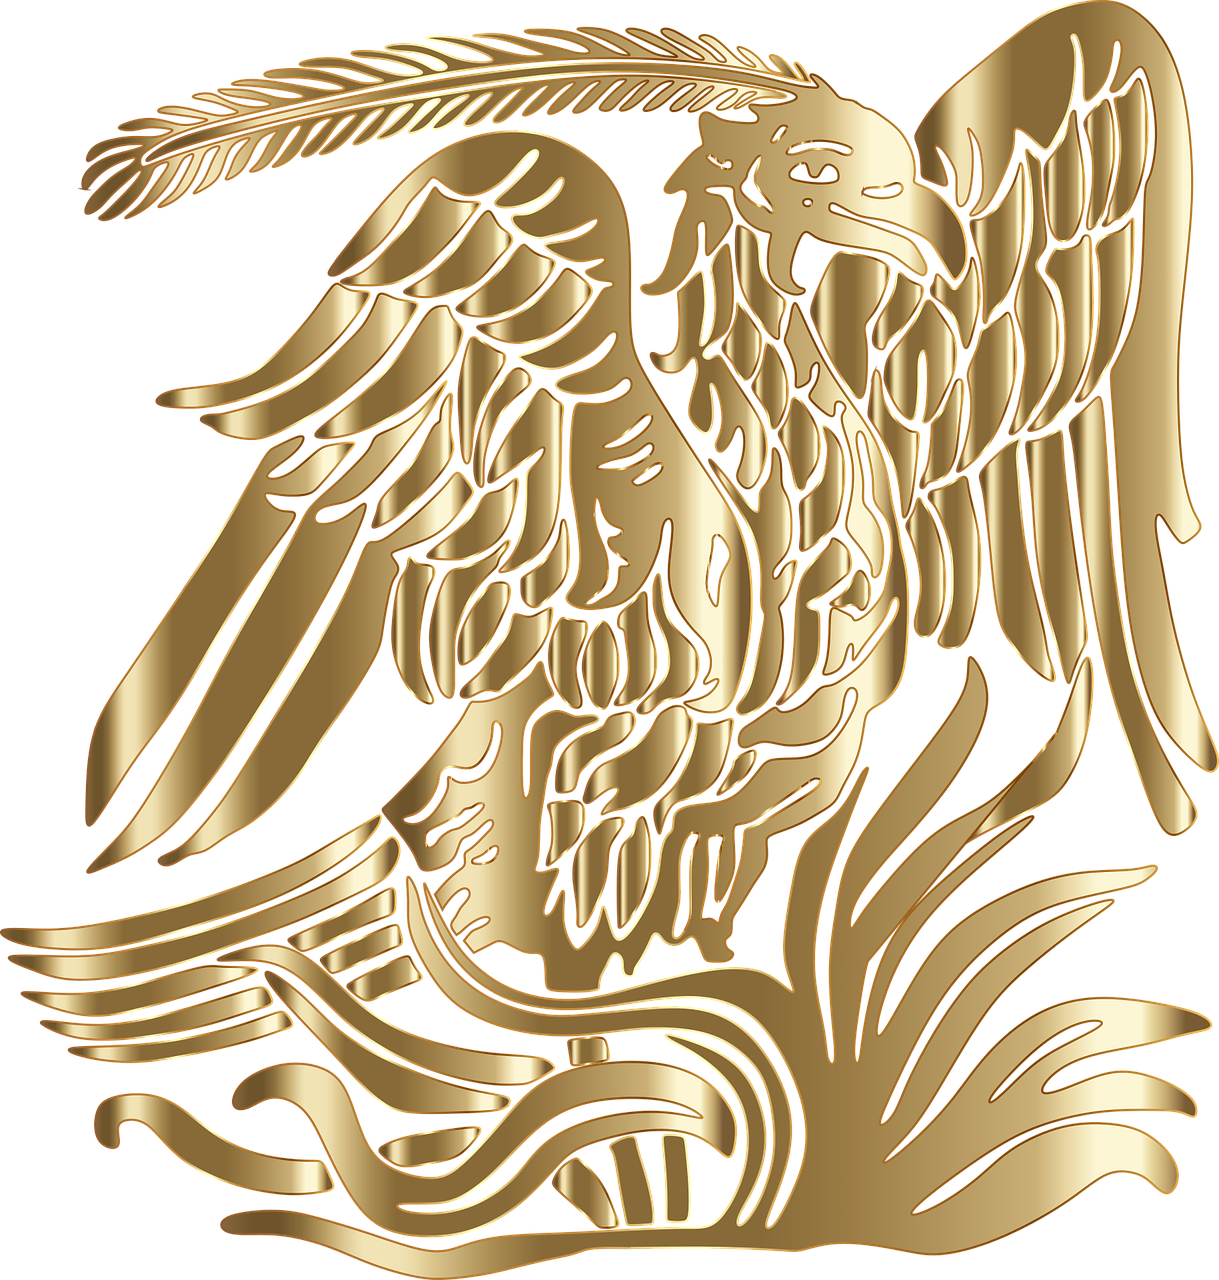 phoenix-bird-gold-legendary-metallic-free-image-from-needpix